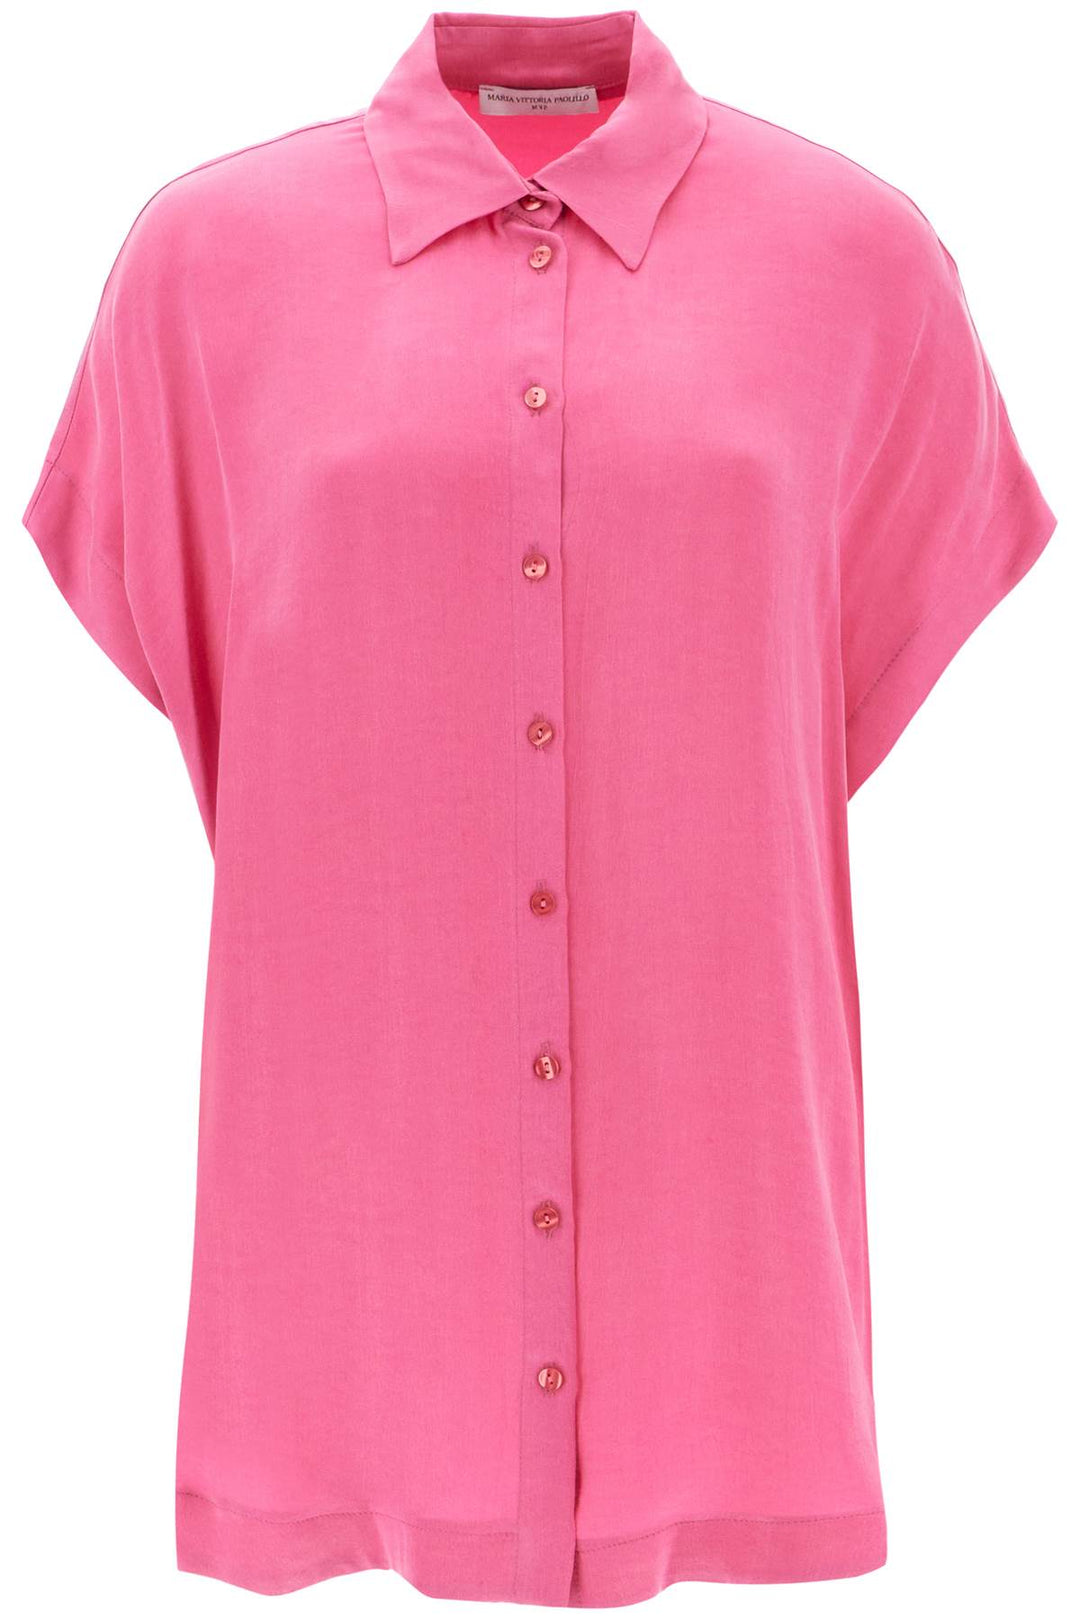 Mvp Wardrobe 'Santa Cruz' Short Sleeved Shirt   Fuxia